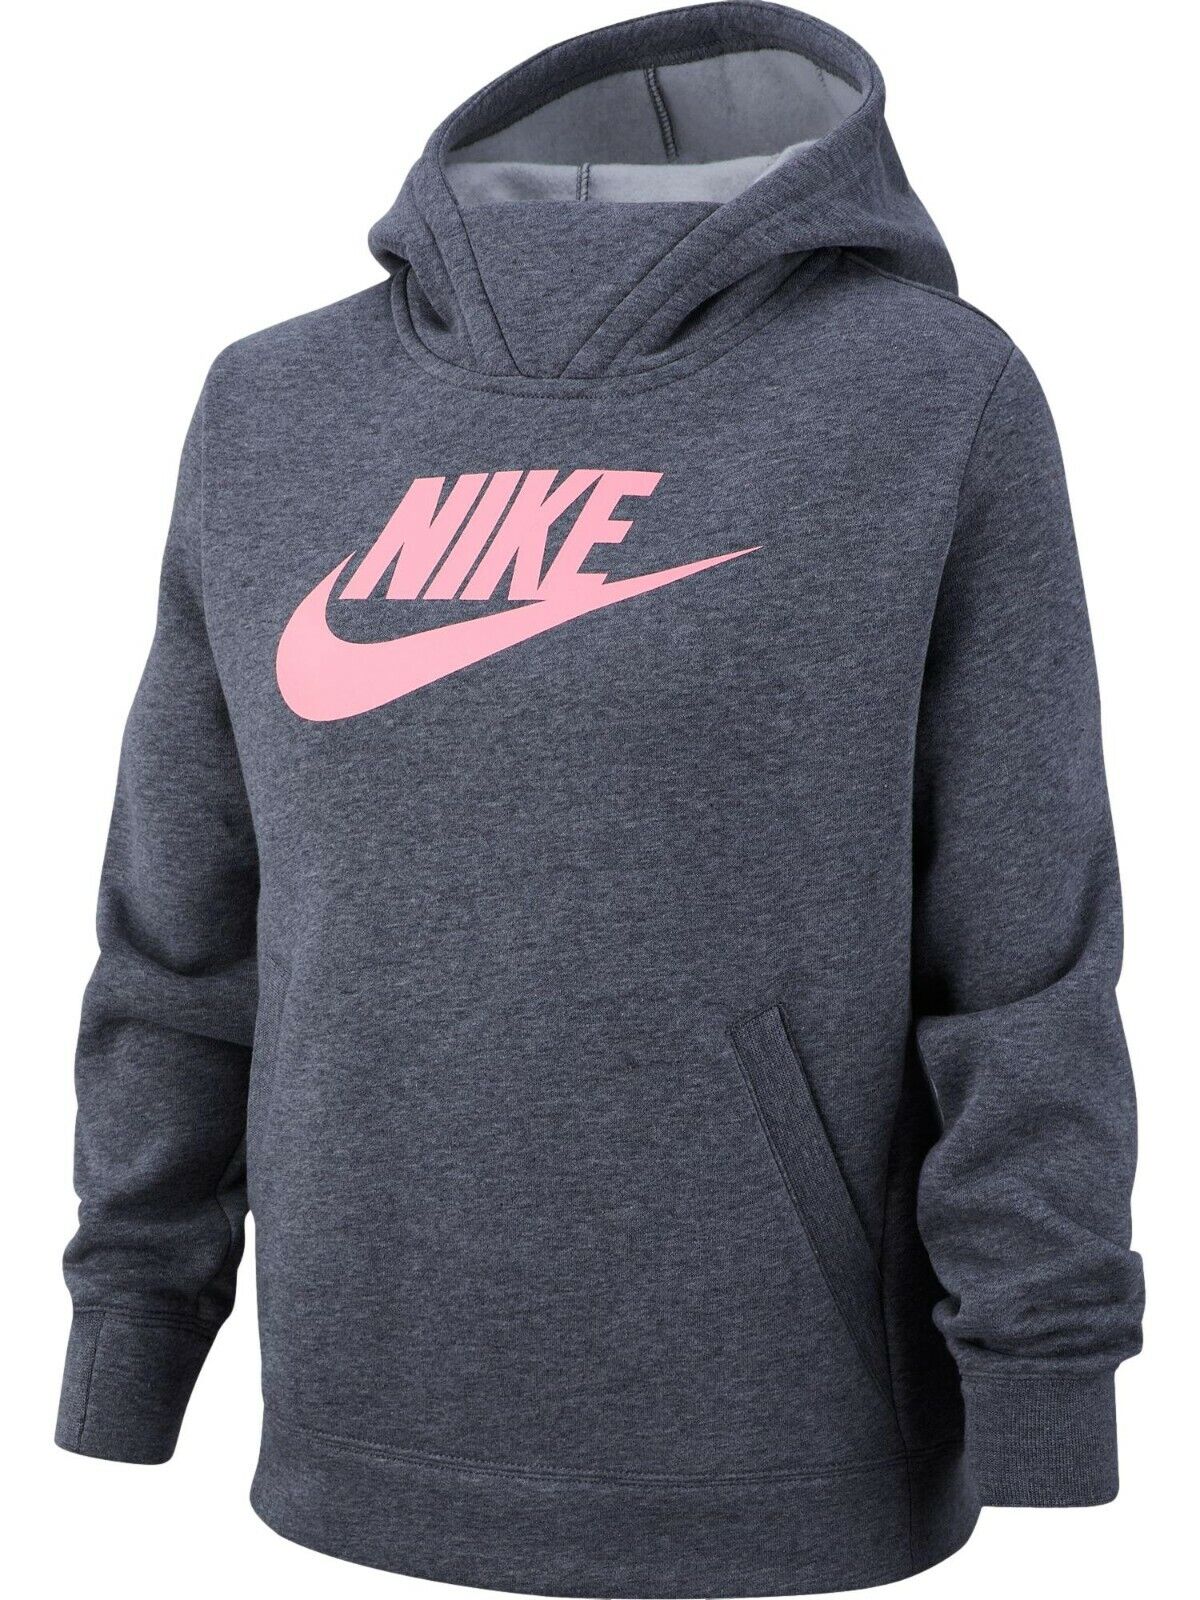 Nike Sportswear Girl's Nsw Pullover Hoodie (gray/pink) Bv2717-094